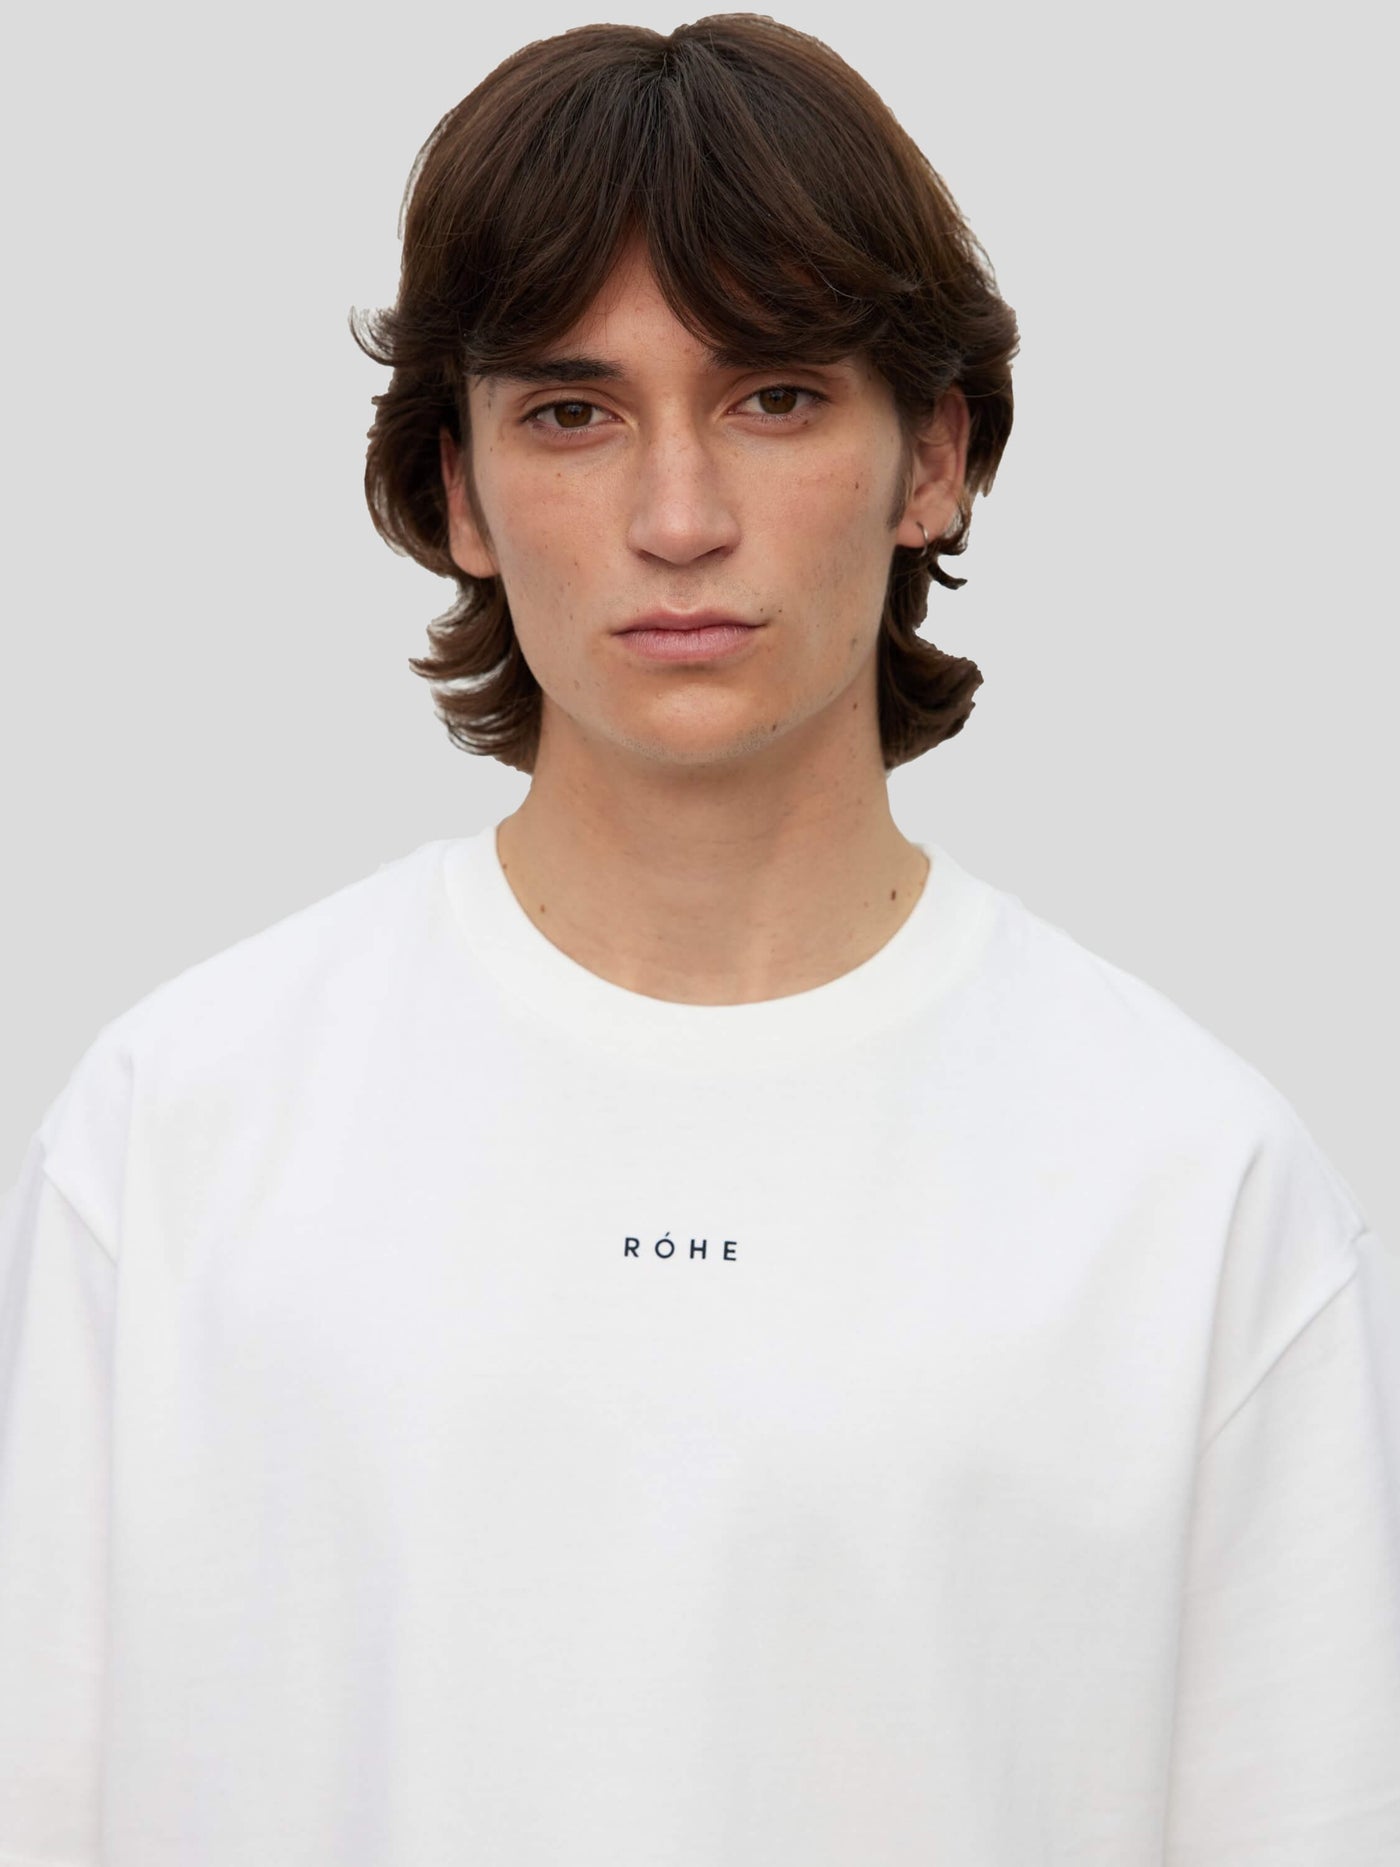 RÓHE Shirts & Polos | T-Shirt FREYE in weiß | 301-22-024-112 white / ADAM/EVE